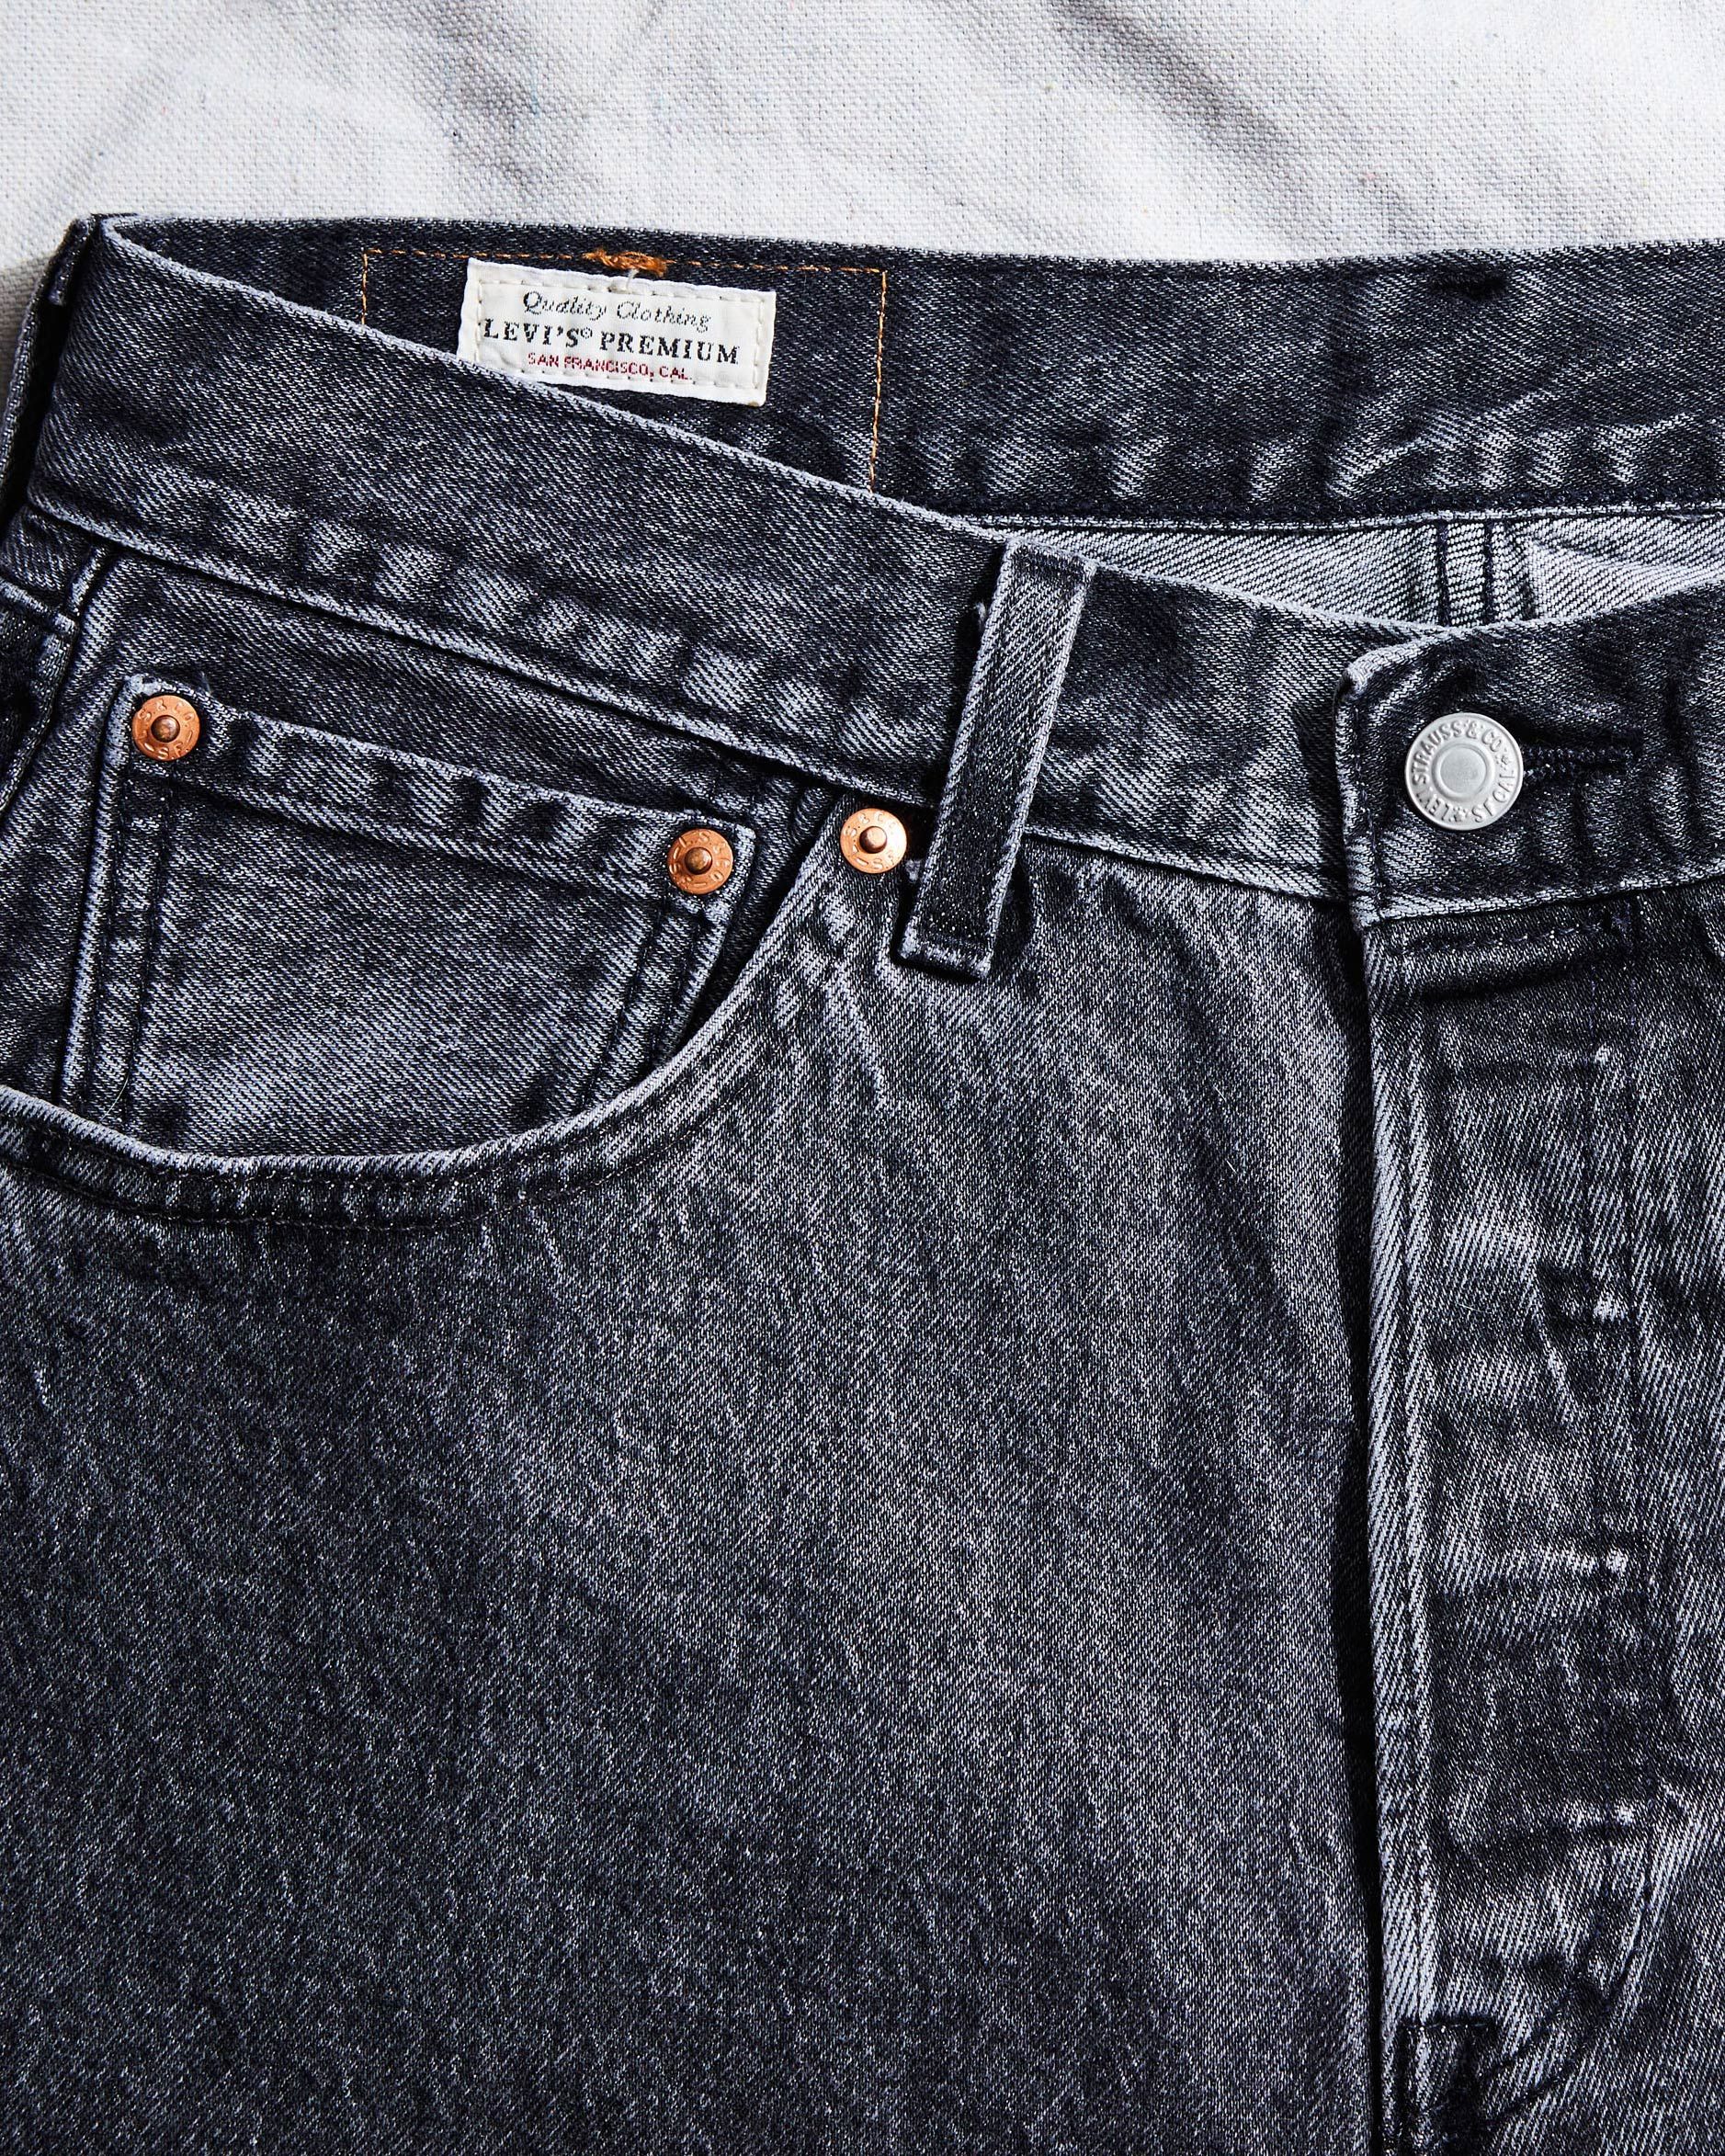 levi's premium jeans line